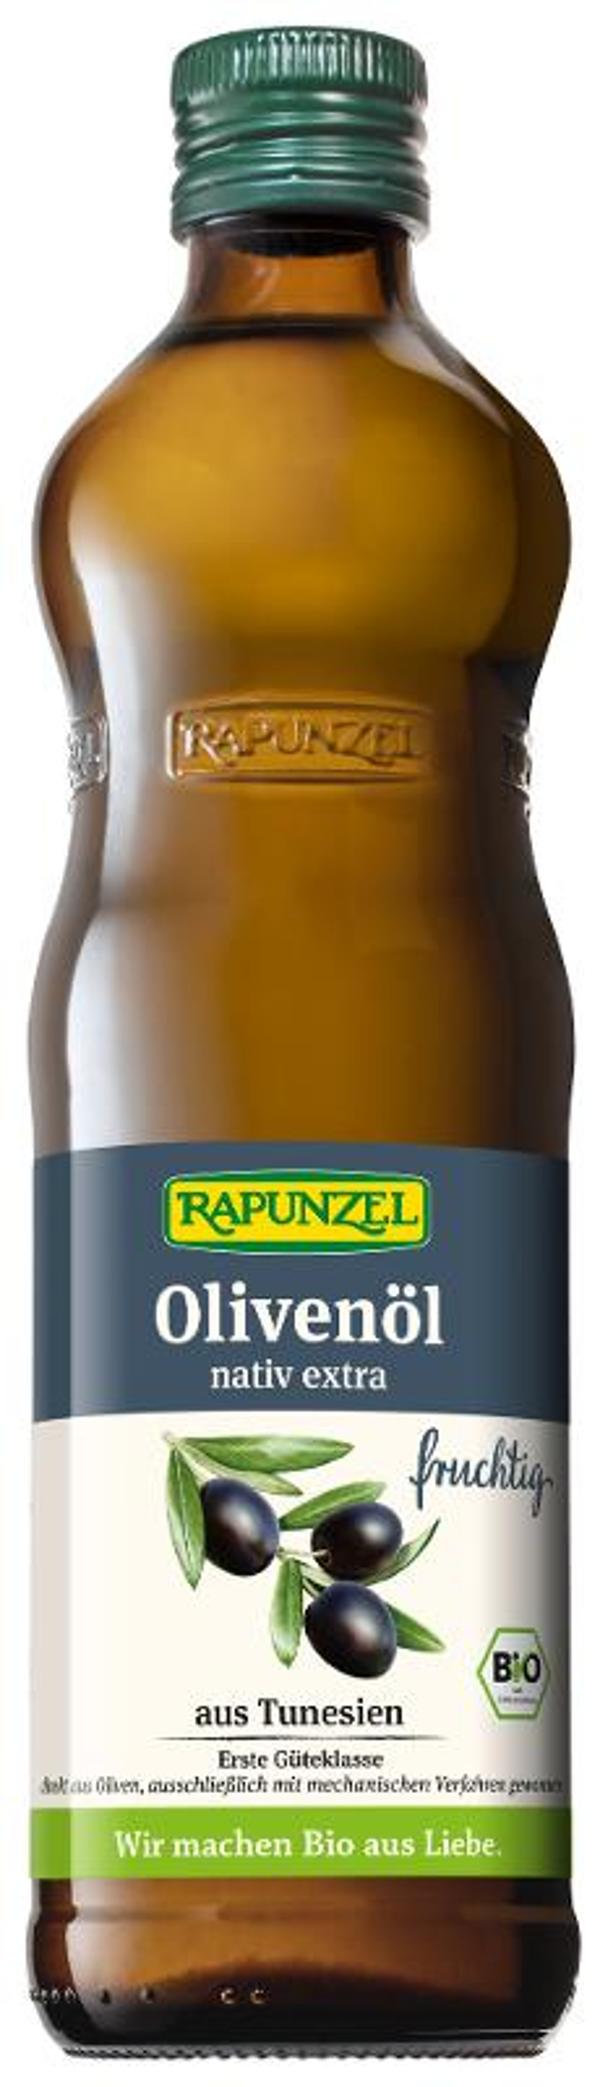 Produktfoto zu Olivenöl fruchtig nativ extra 0,5l Rapunzel